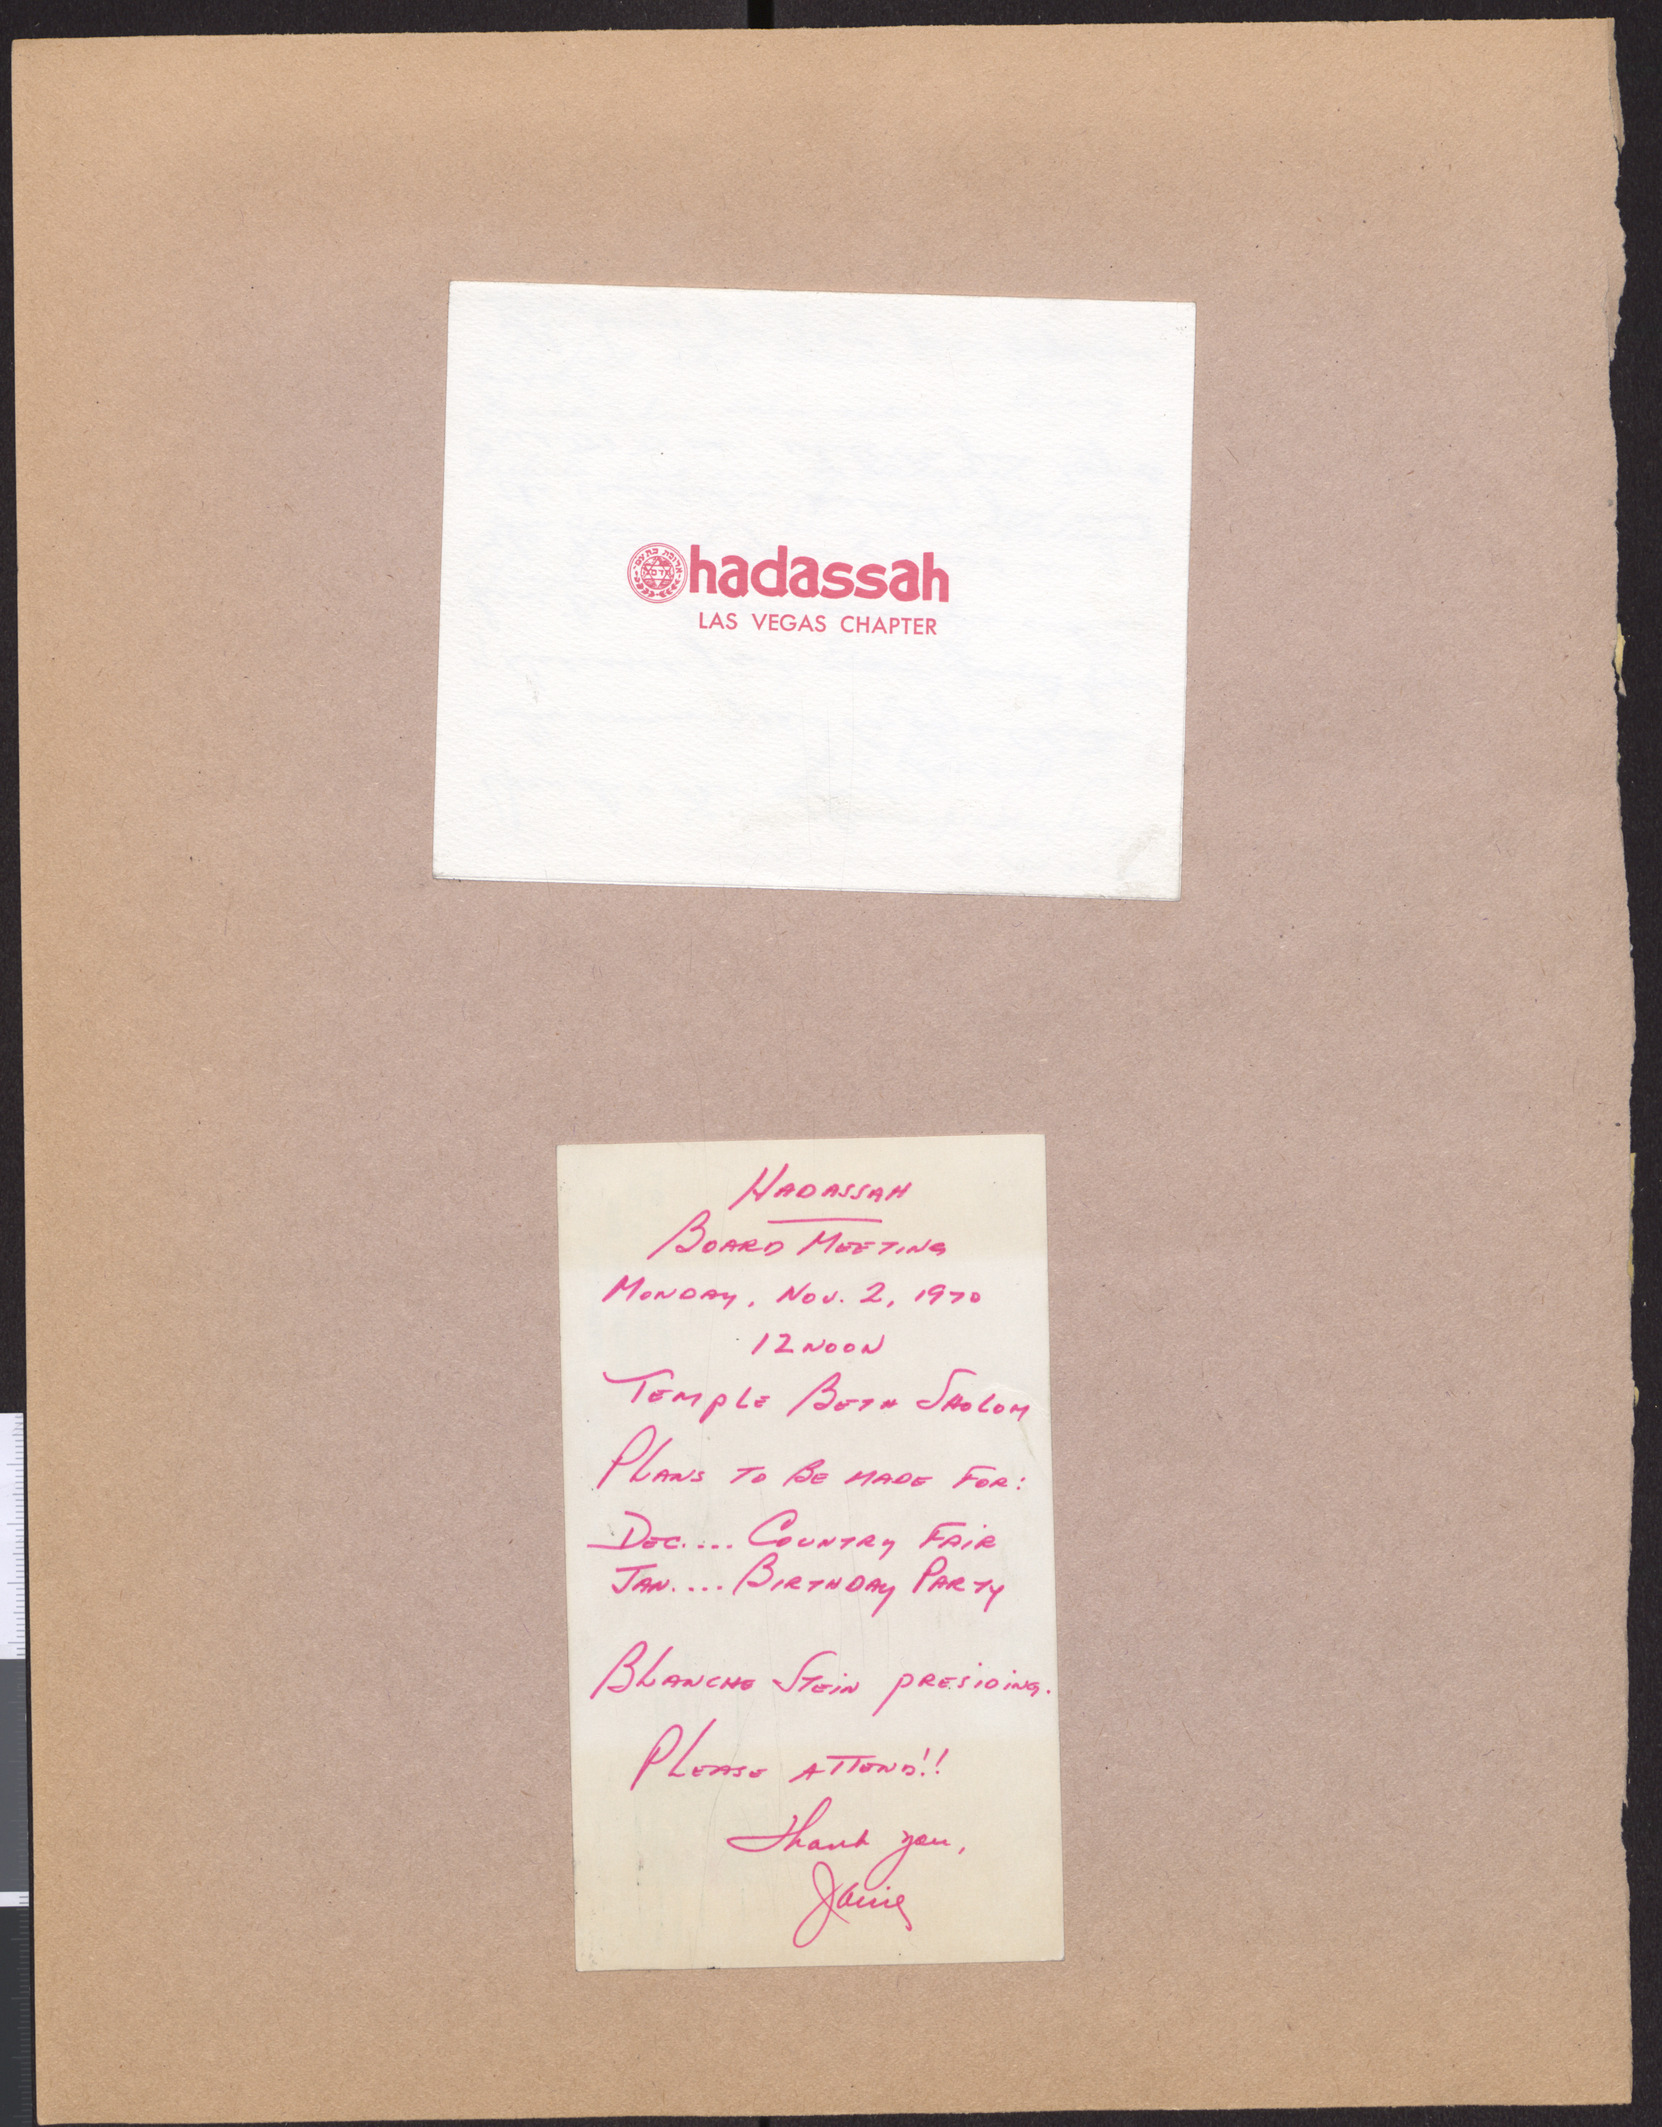 Notecard and invitation card from Hadassah Las Vegas Chapter, November 2, 1970